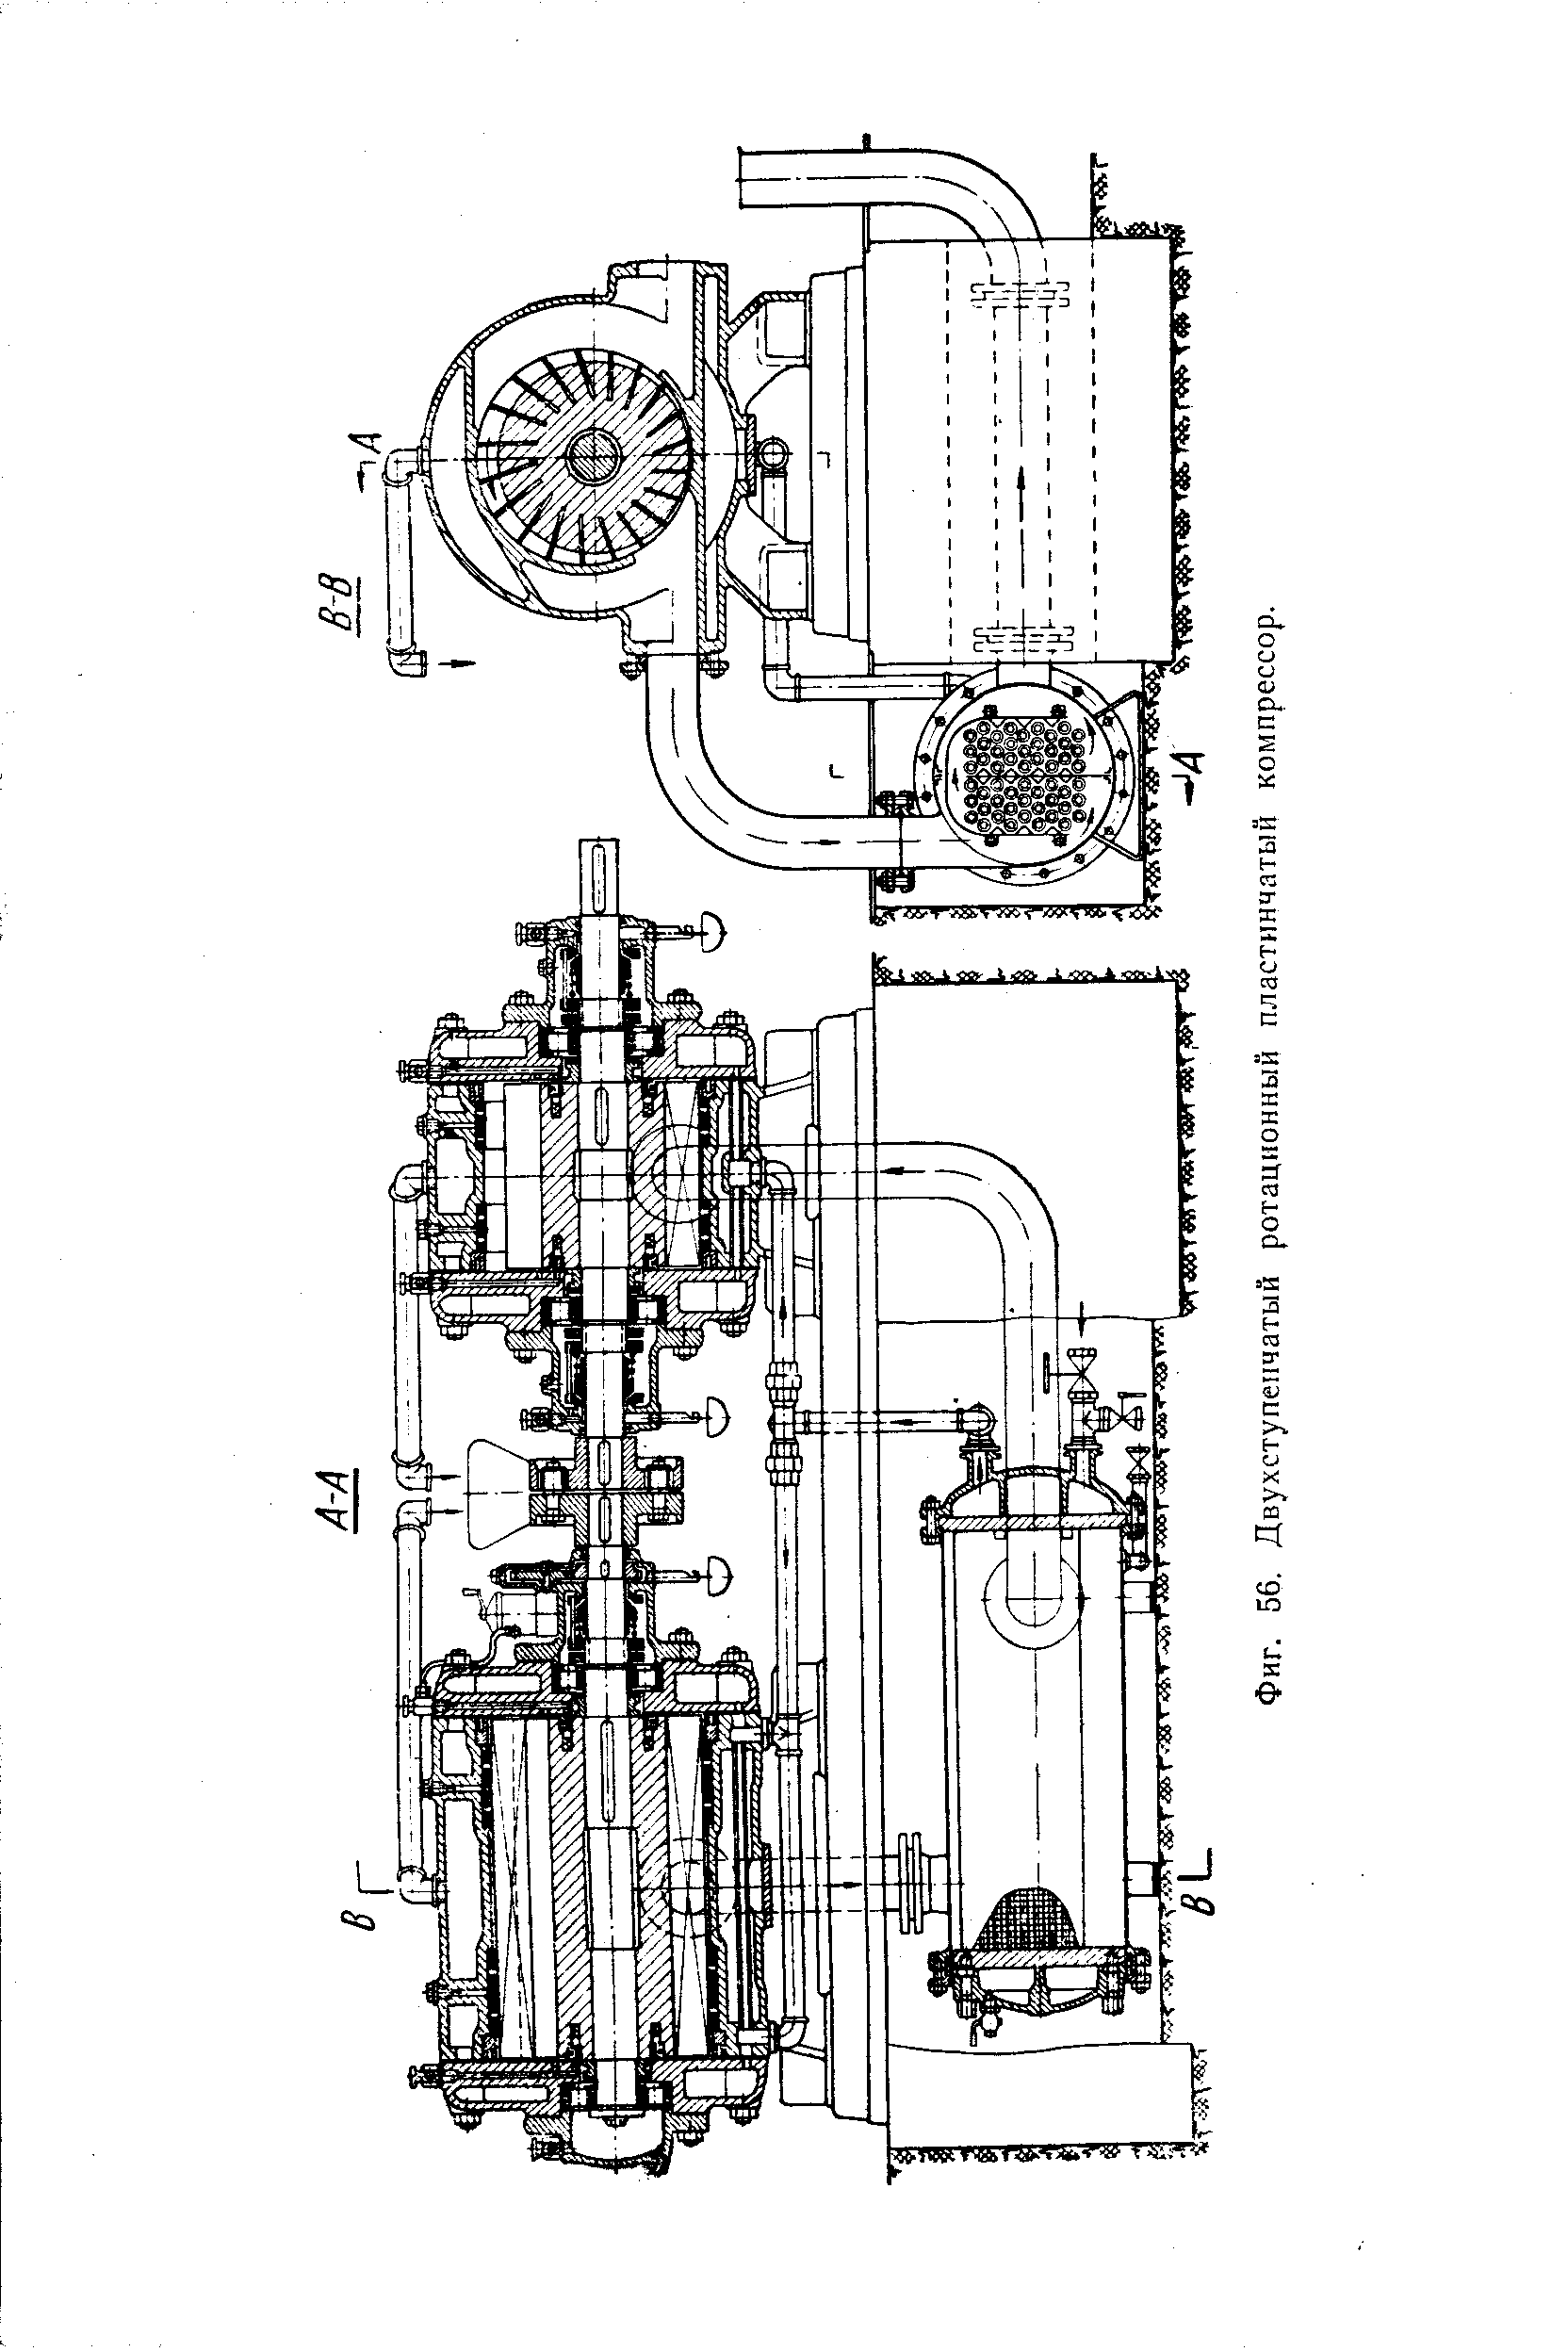 Фиг. 56. Двухступенчатый ротационный пластинчатый компрессор.
